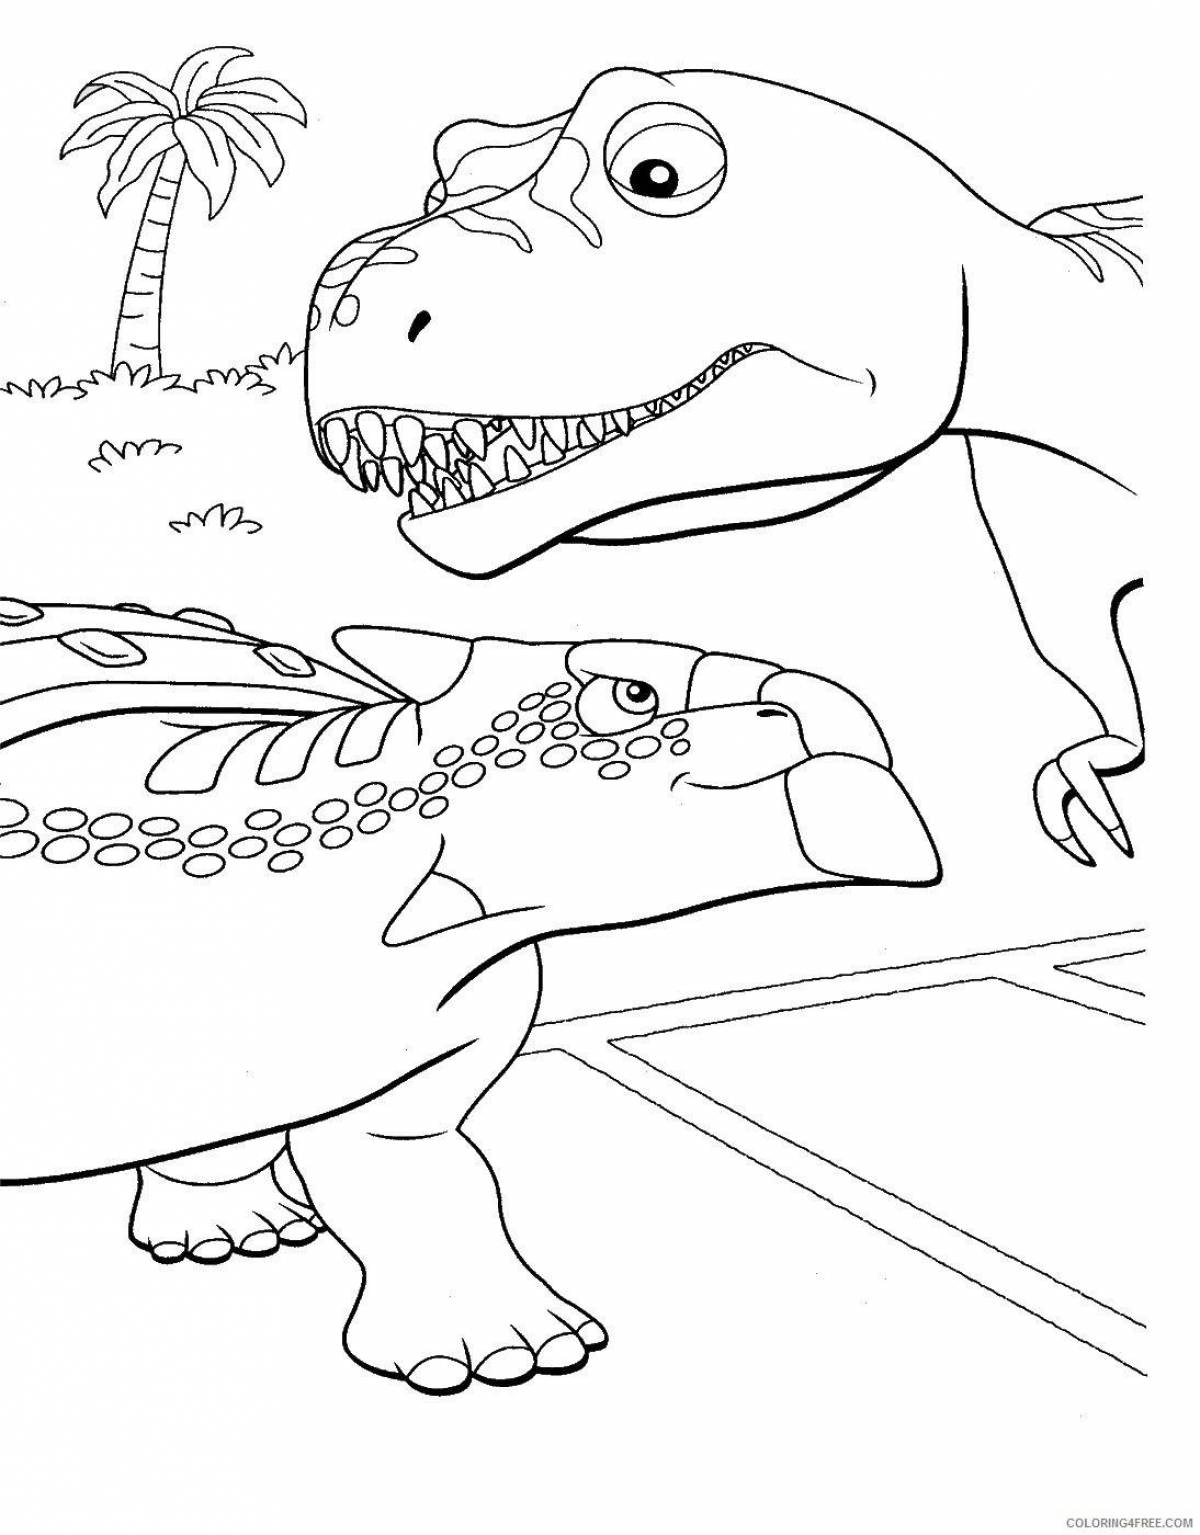 Fabulous turbosaurus coloring page